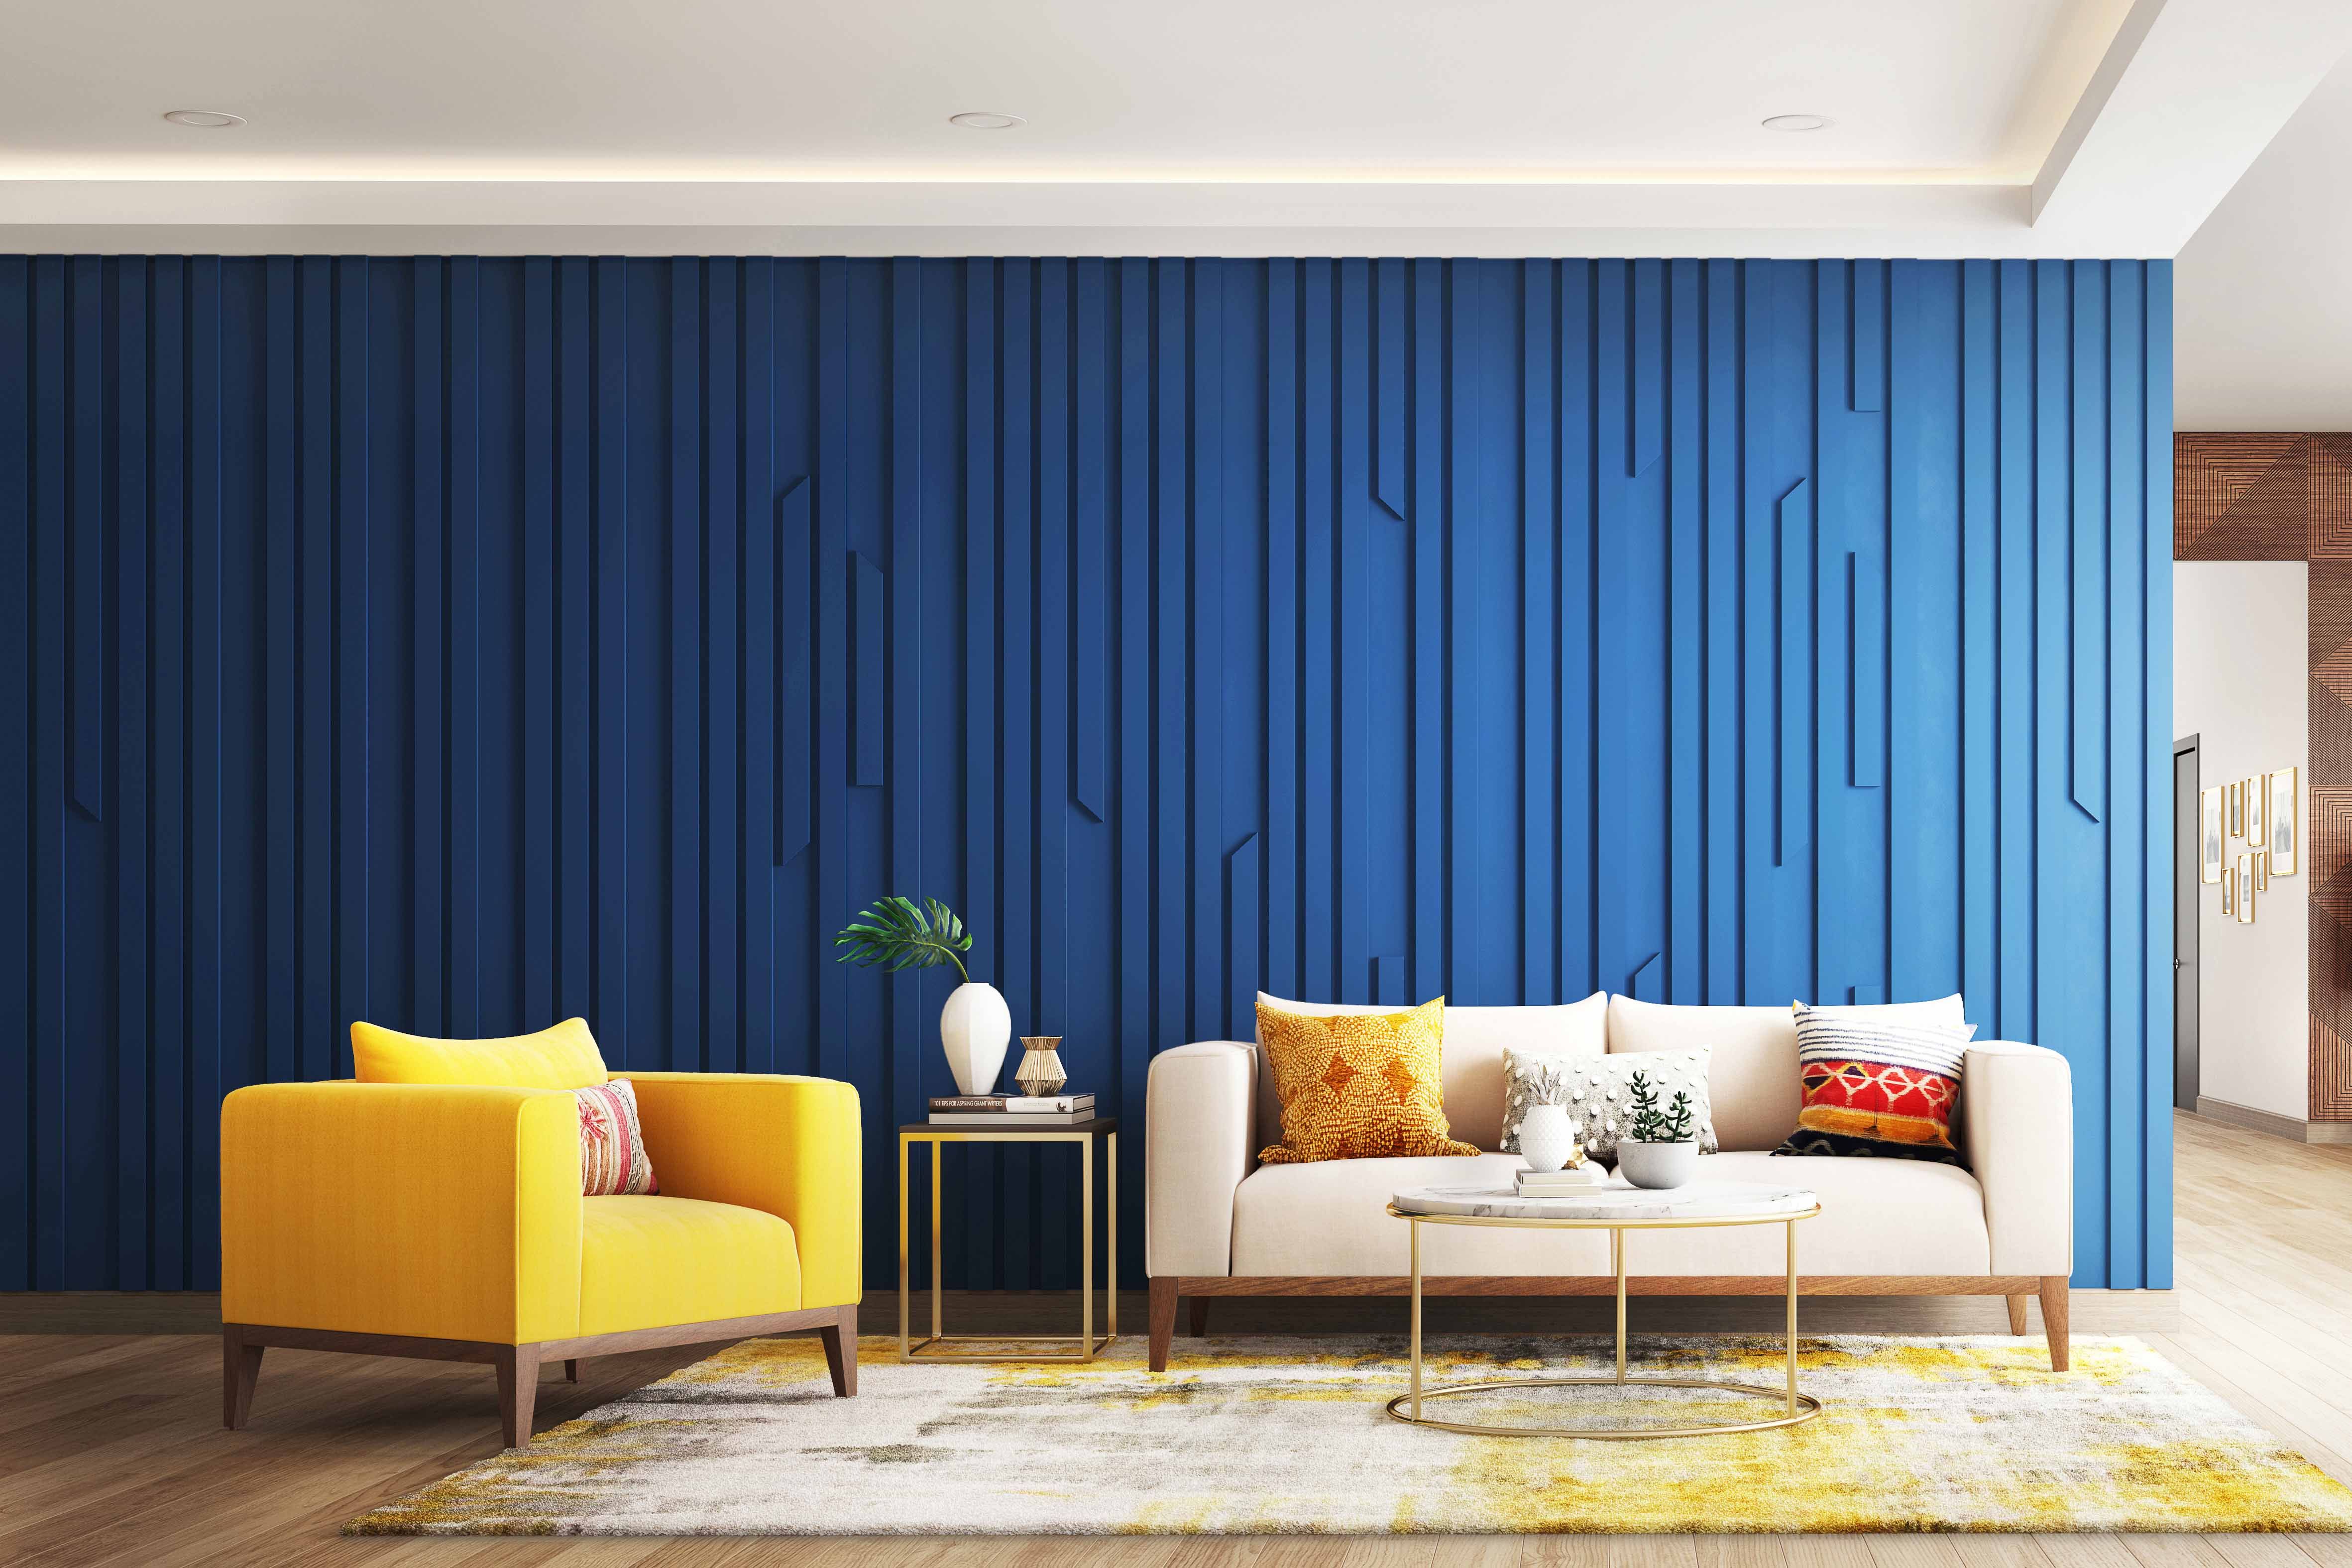 100 Living Room Wall Decor Design Ideas For Your Home Interiors Livspace